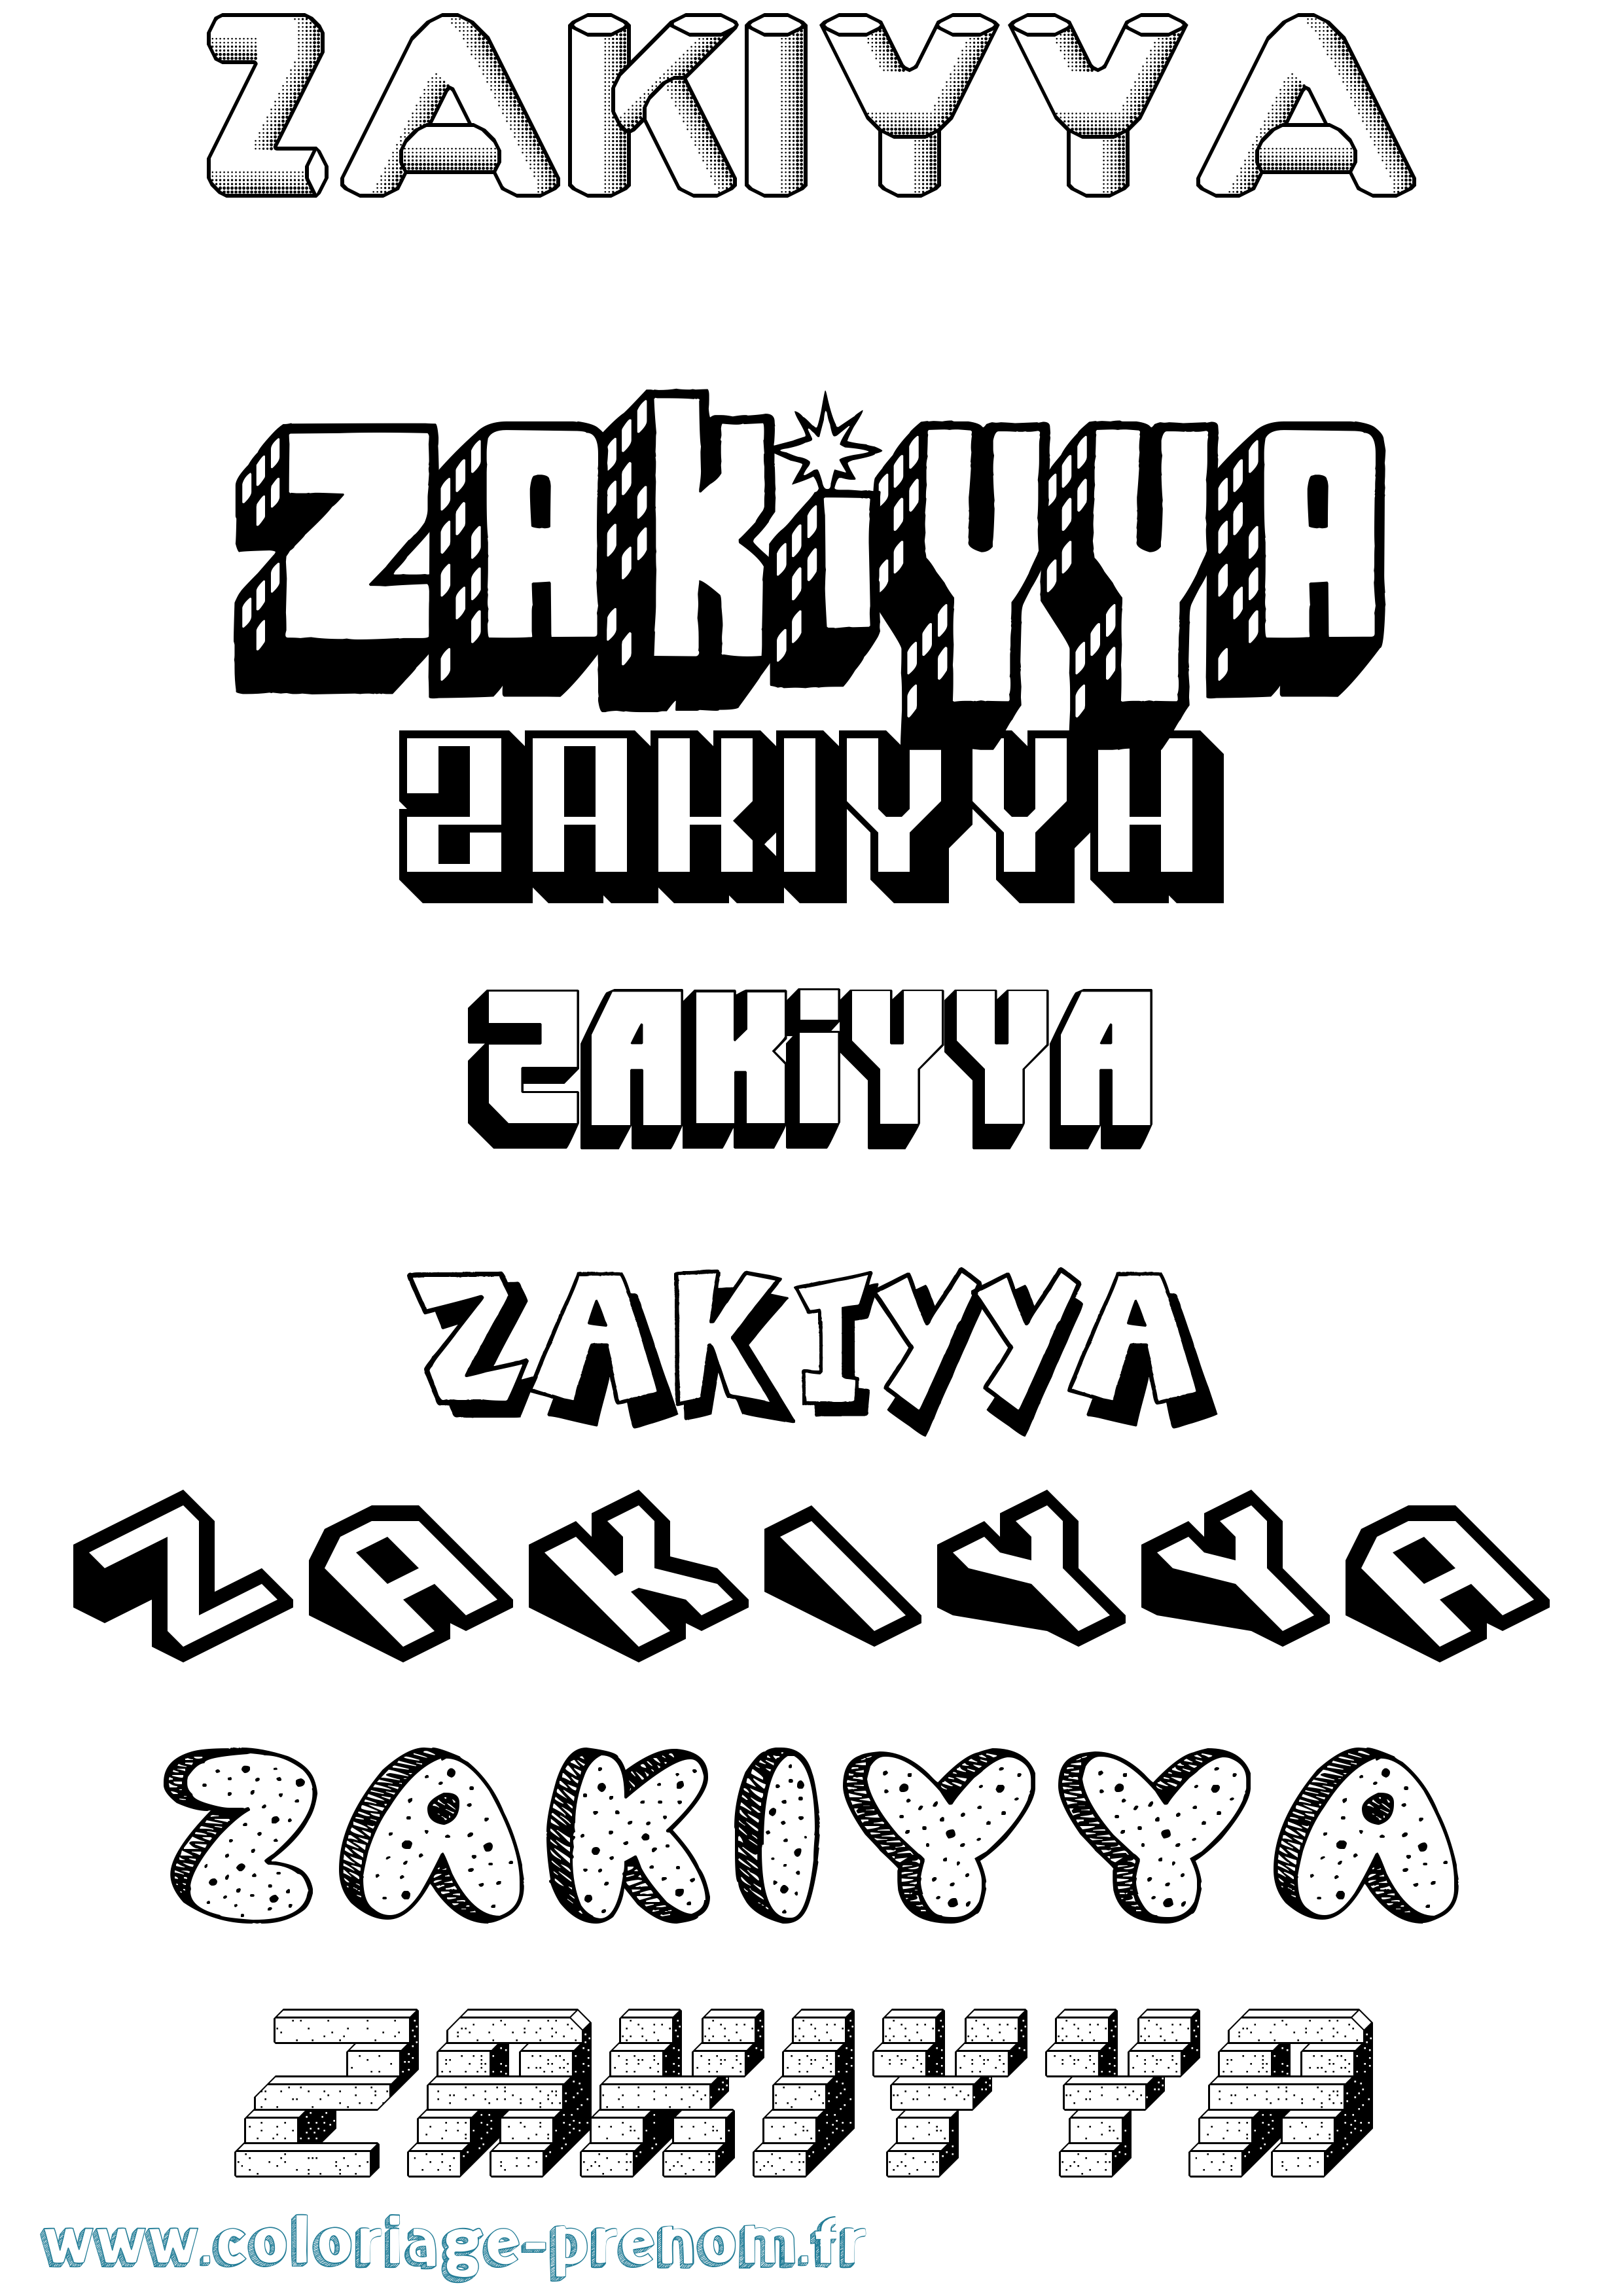 Coloriage prénom Zakiyya Effet 3D